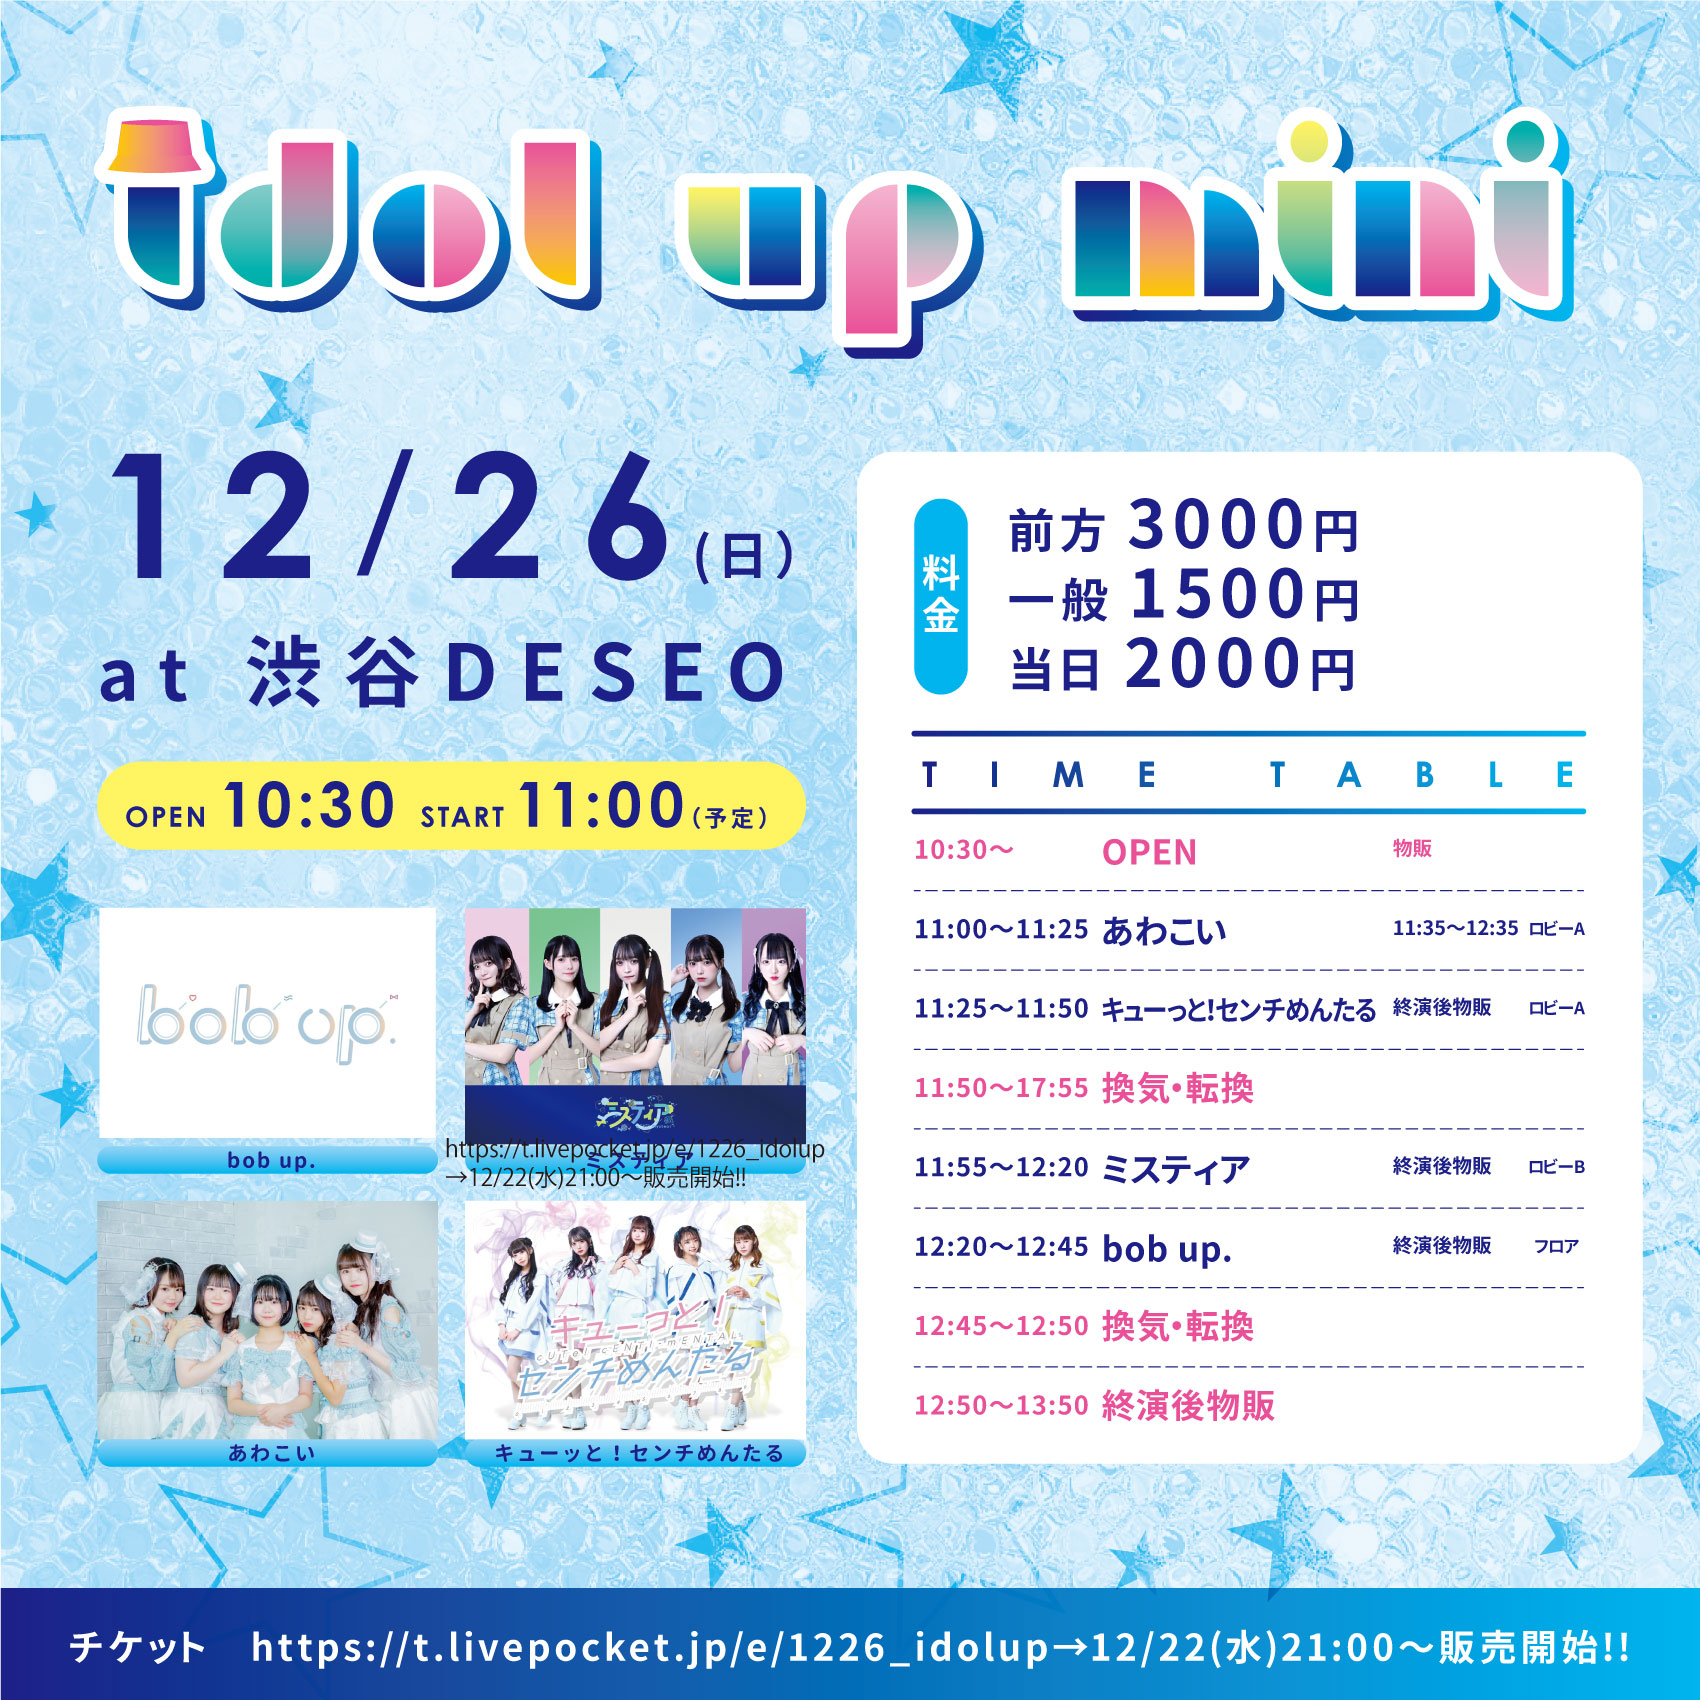 2021/12/26(日) 『idol up mini』 渋谷DESEO